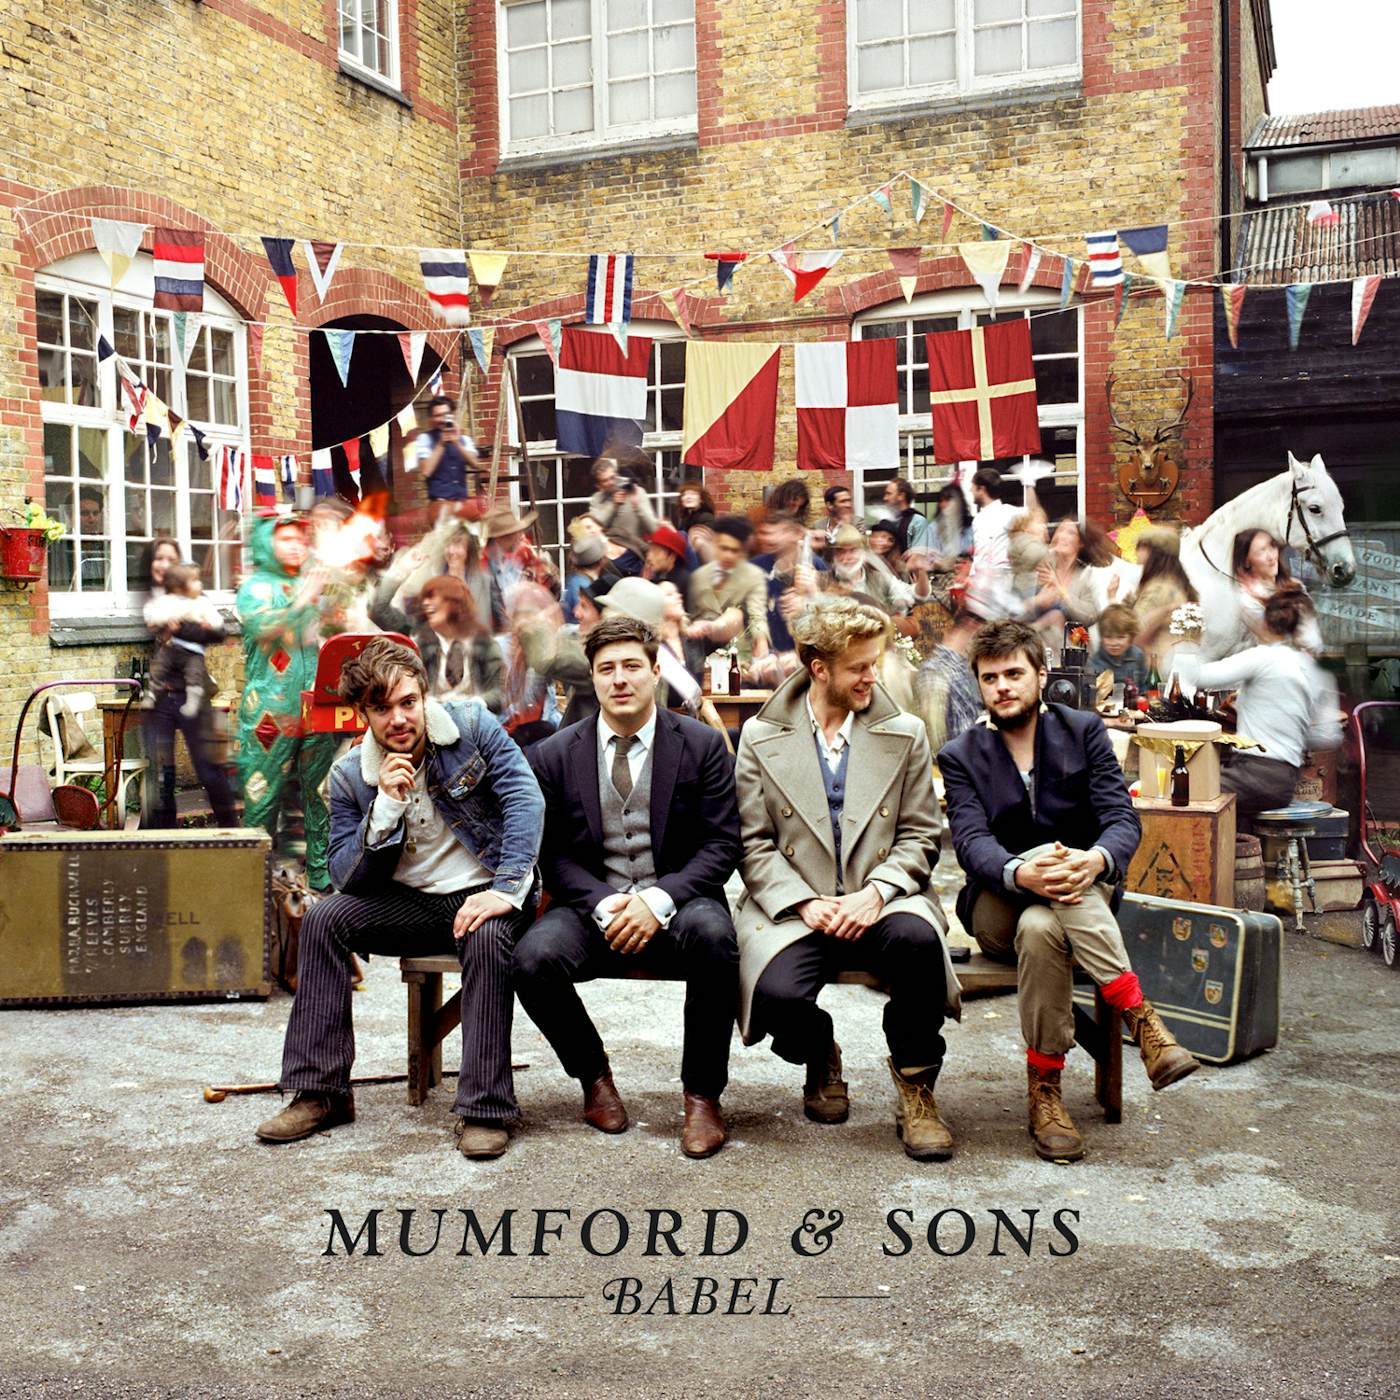 Mumford & Sons BABEL CD